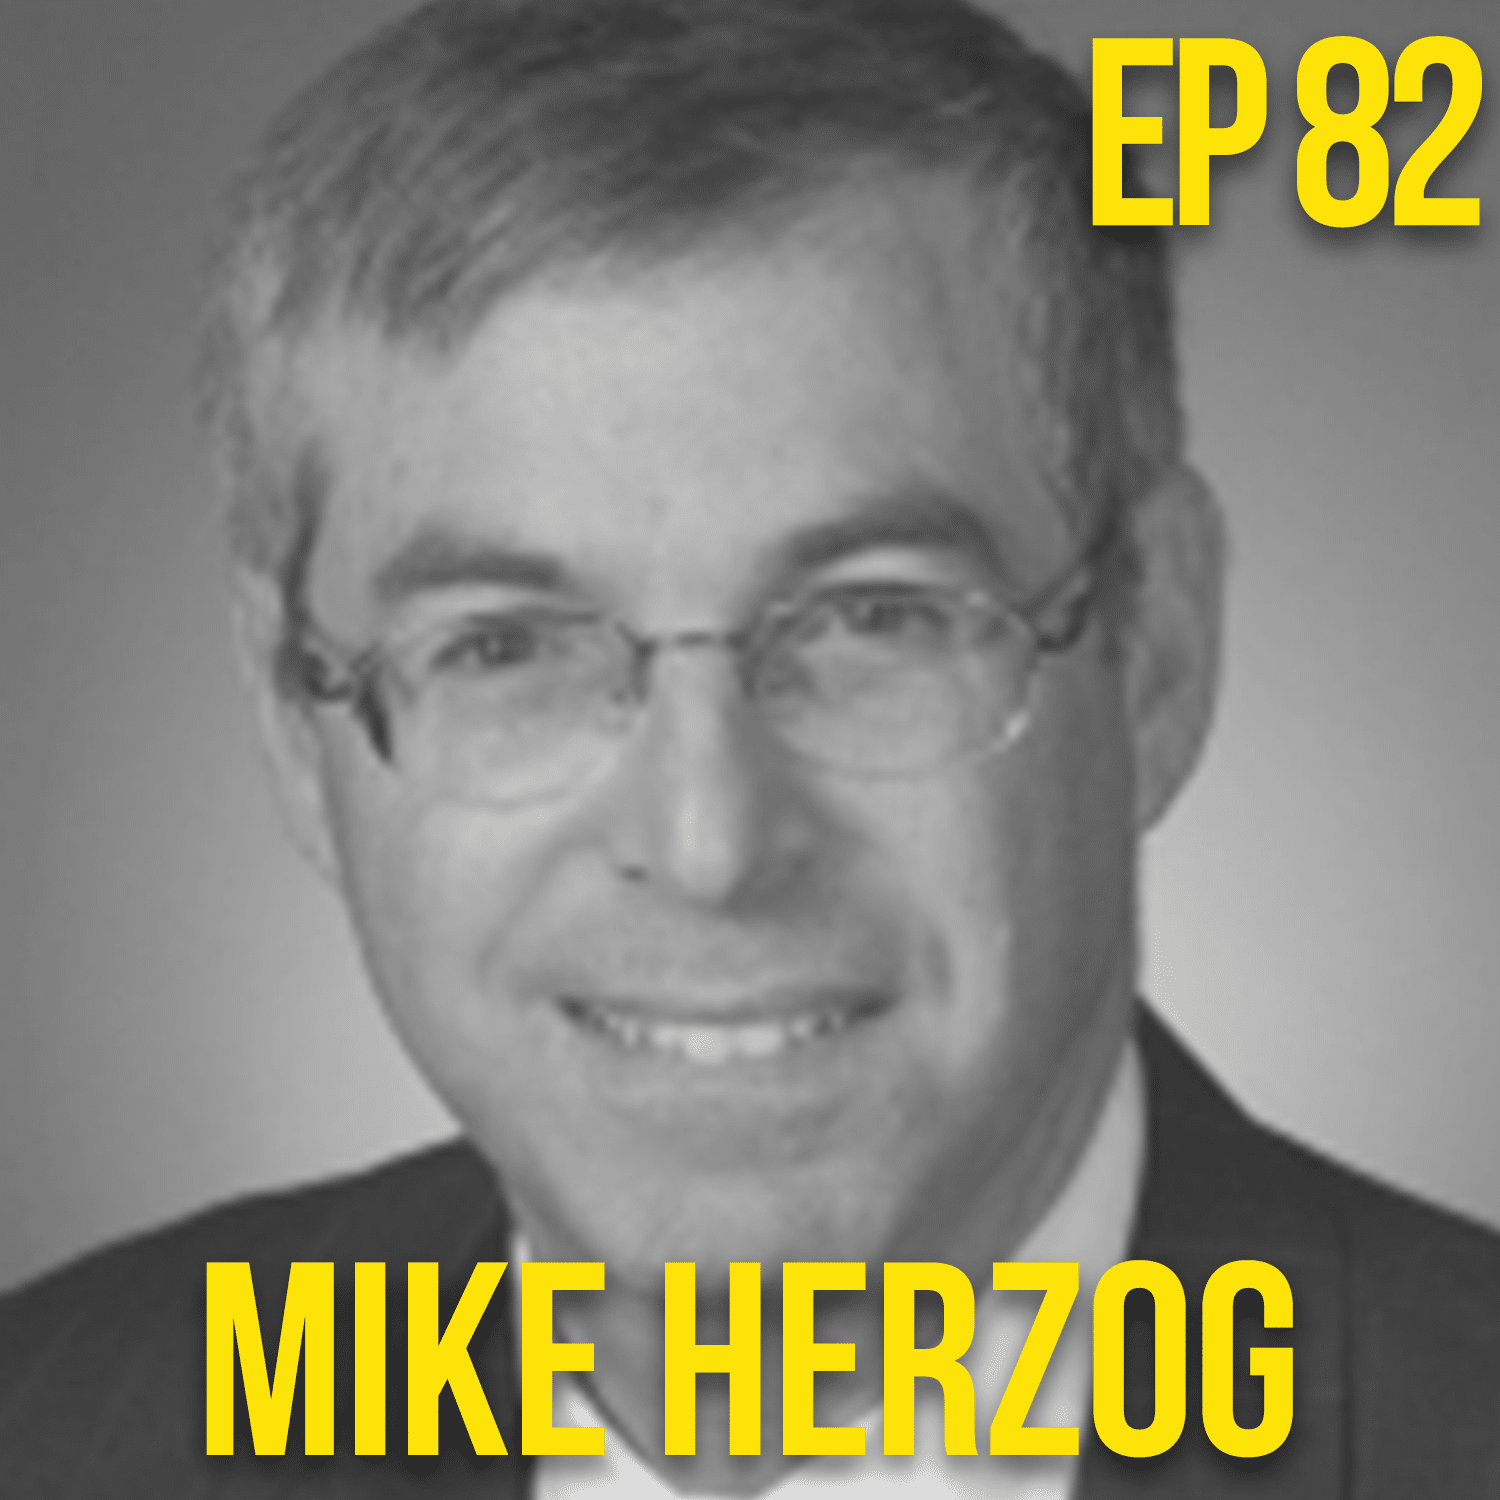 Mike Herzog